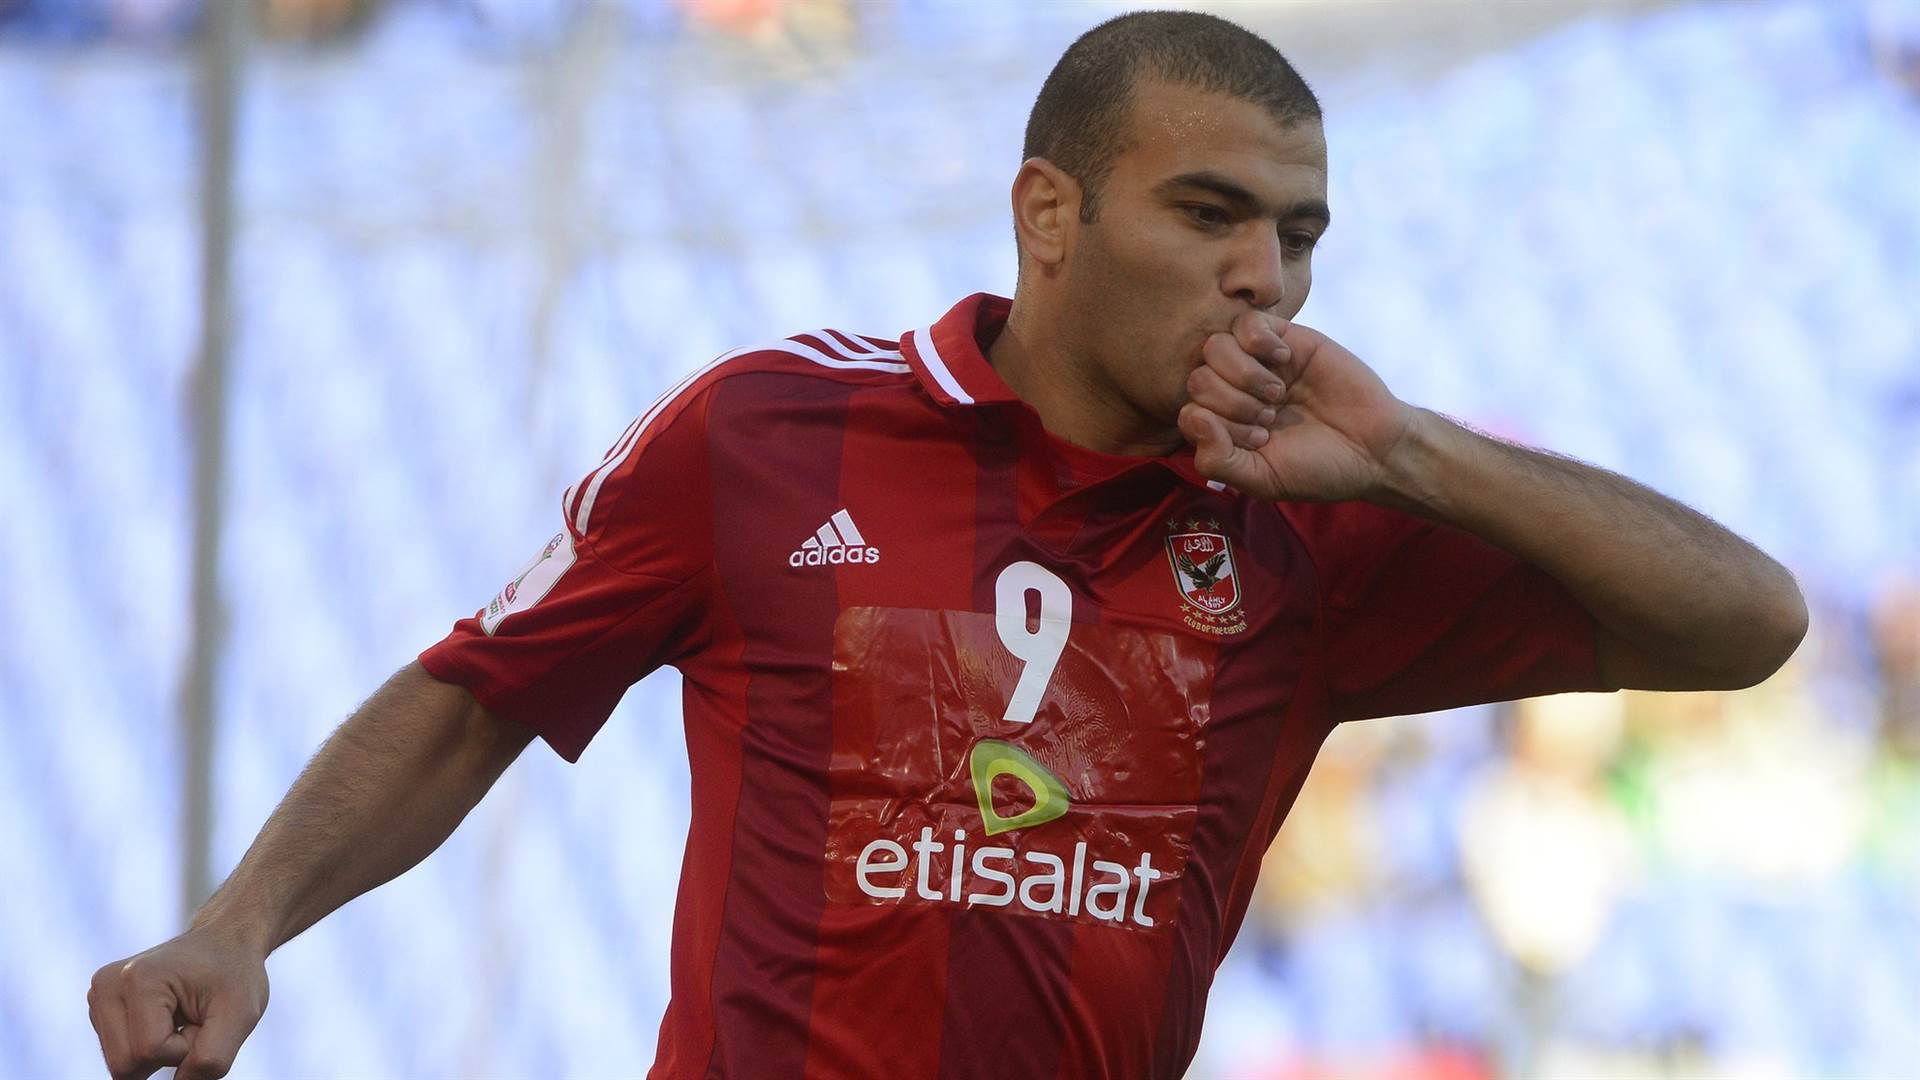 3. Emad Motaeb - 24 goals in 74 games (Al Ahly)